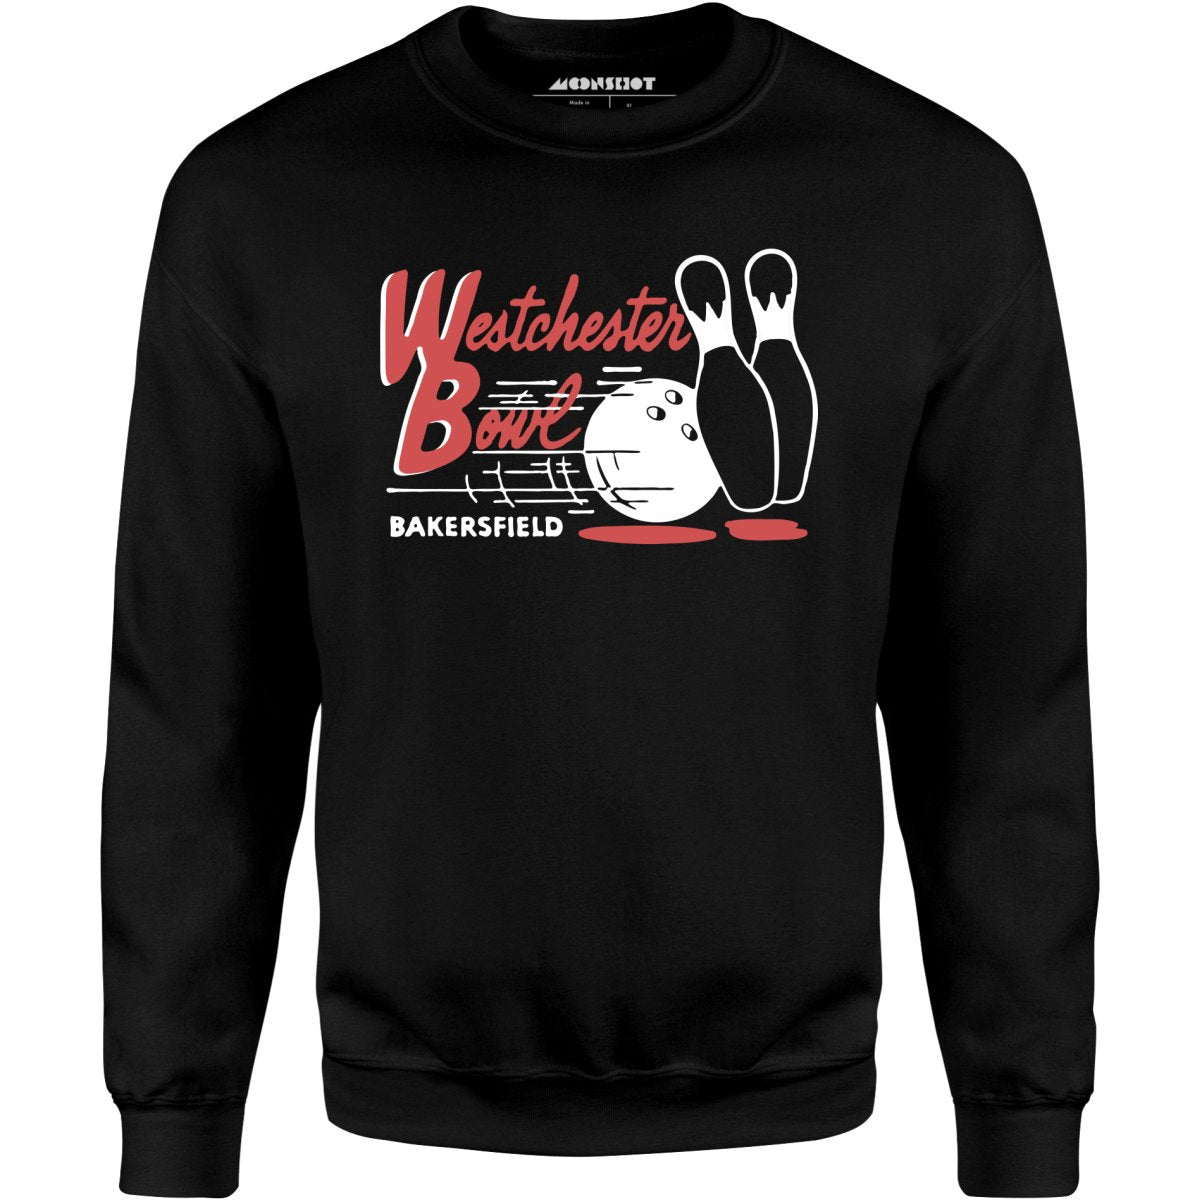 Westchester Bowl - Bakersfield, CA - Vintage Bowling Alley - Unisex Sweatshirt